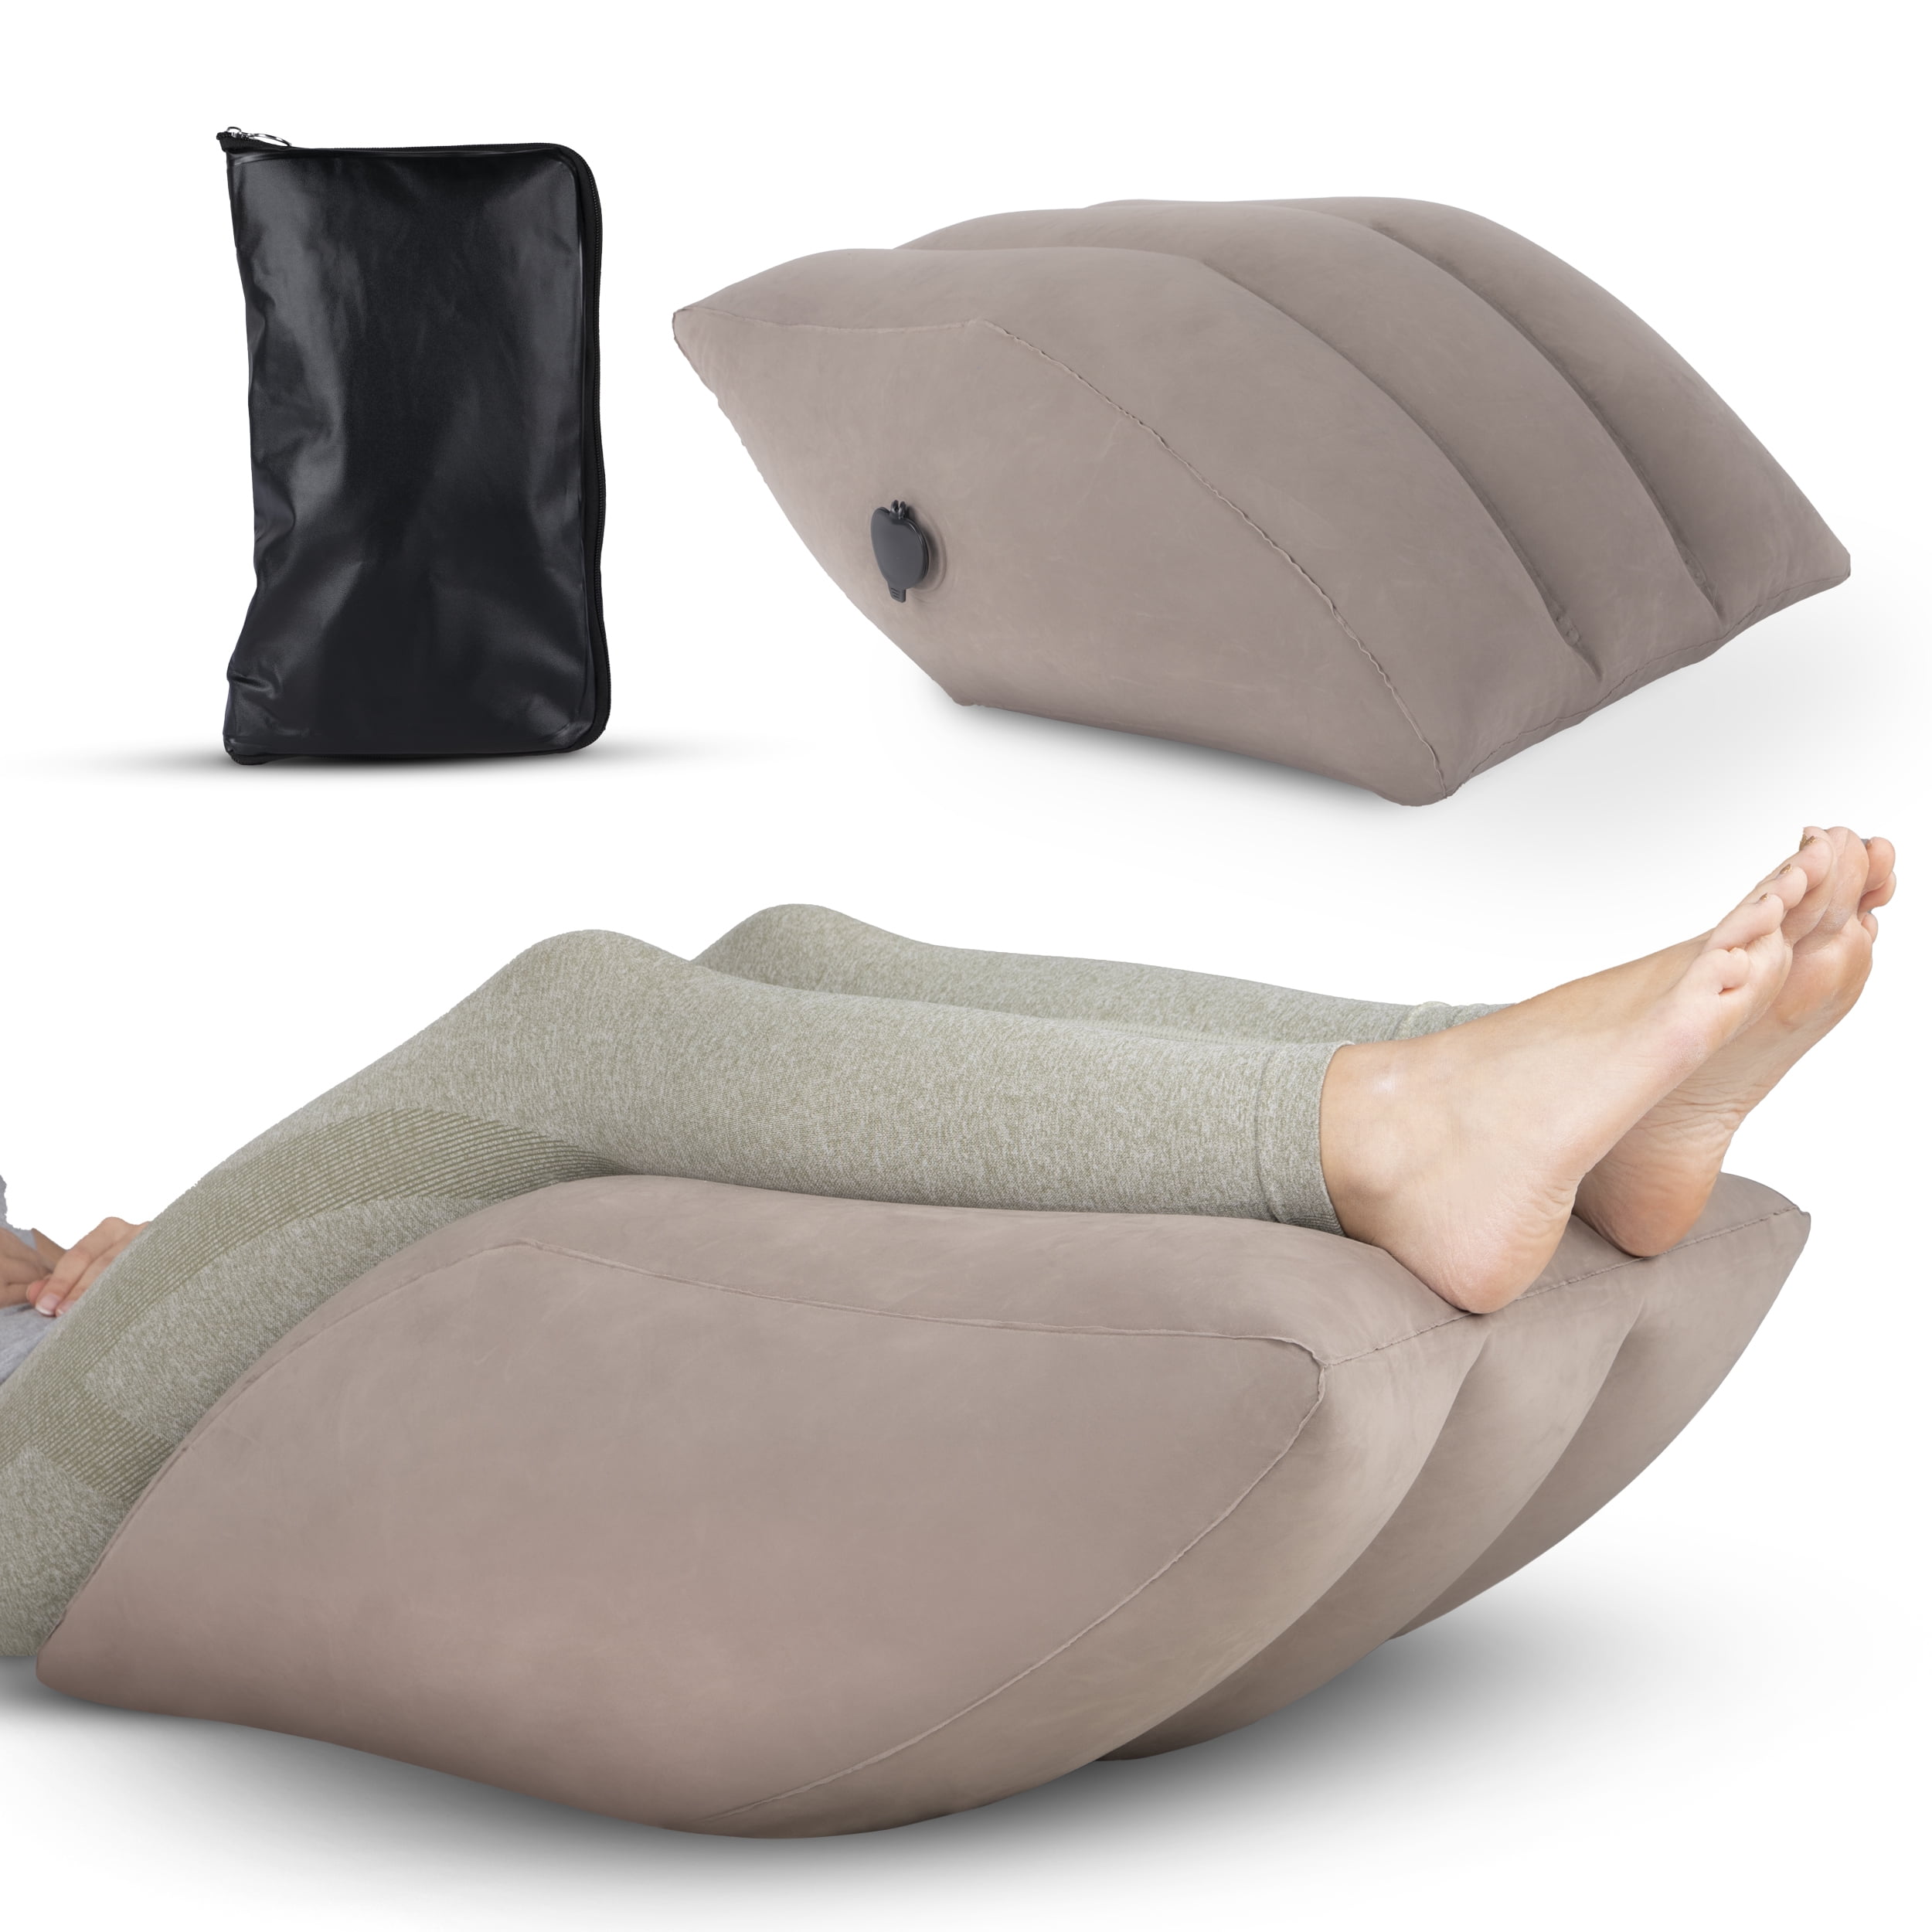 Aestoria Inflatable Leg Elevation Pillow Portable Leg Rest Wedge Pillow, Size: One size, Beige